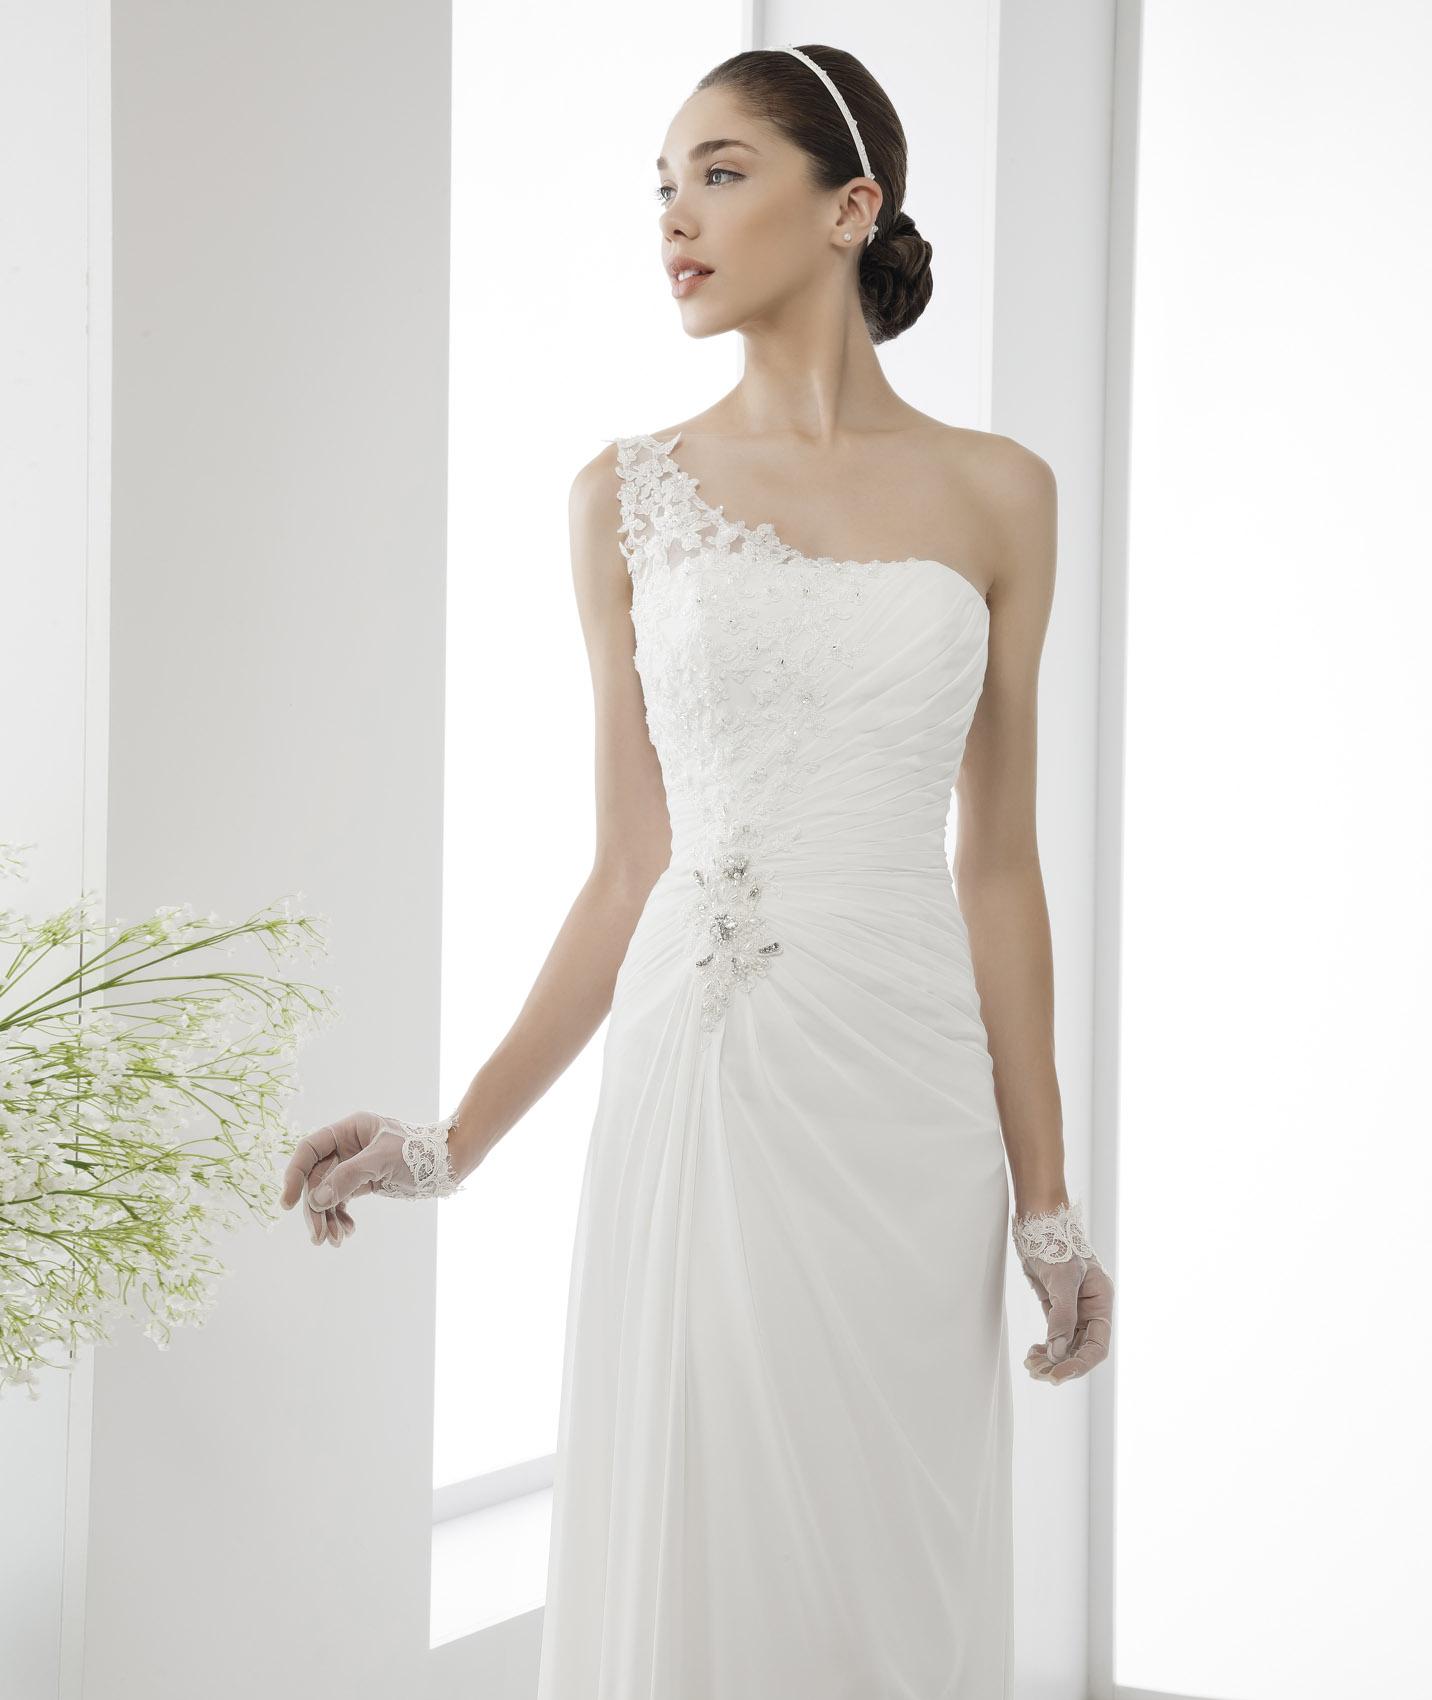 Simple Sheath/Column One Shoulder Beading&Sequins Lace Sweep/Brush Train Chiffon Wedding Dresses